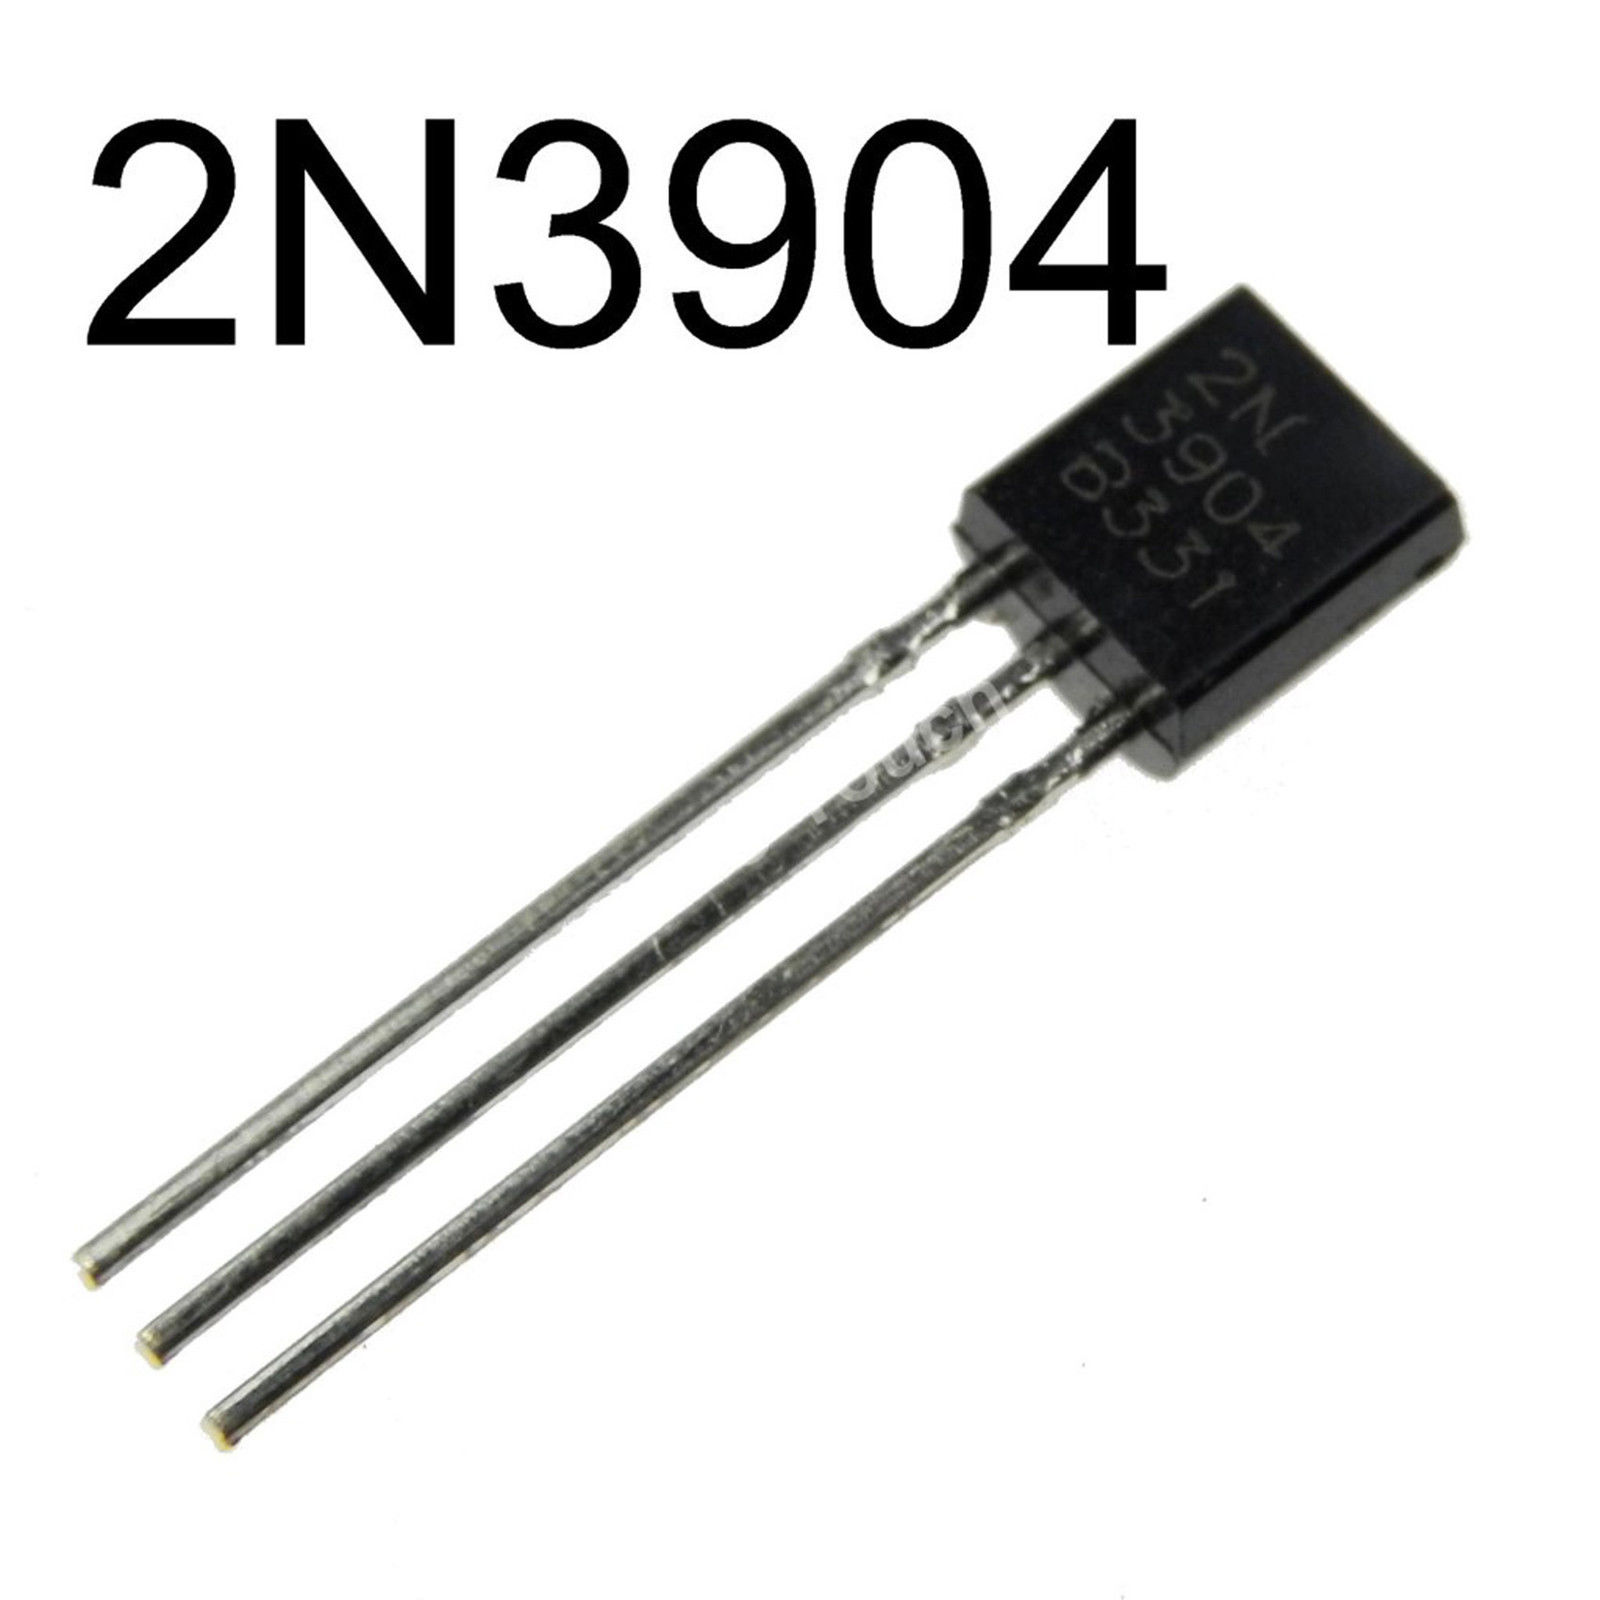 2N3904 TO-92 NPN General Purpose Transistor UK ...............